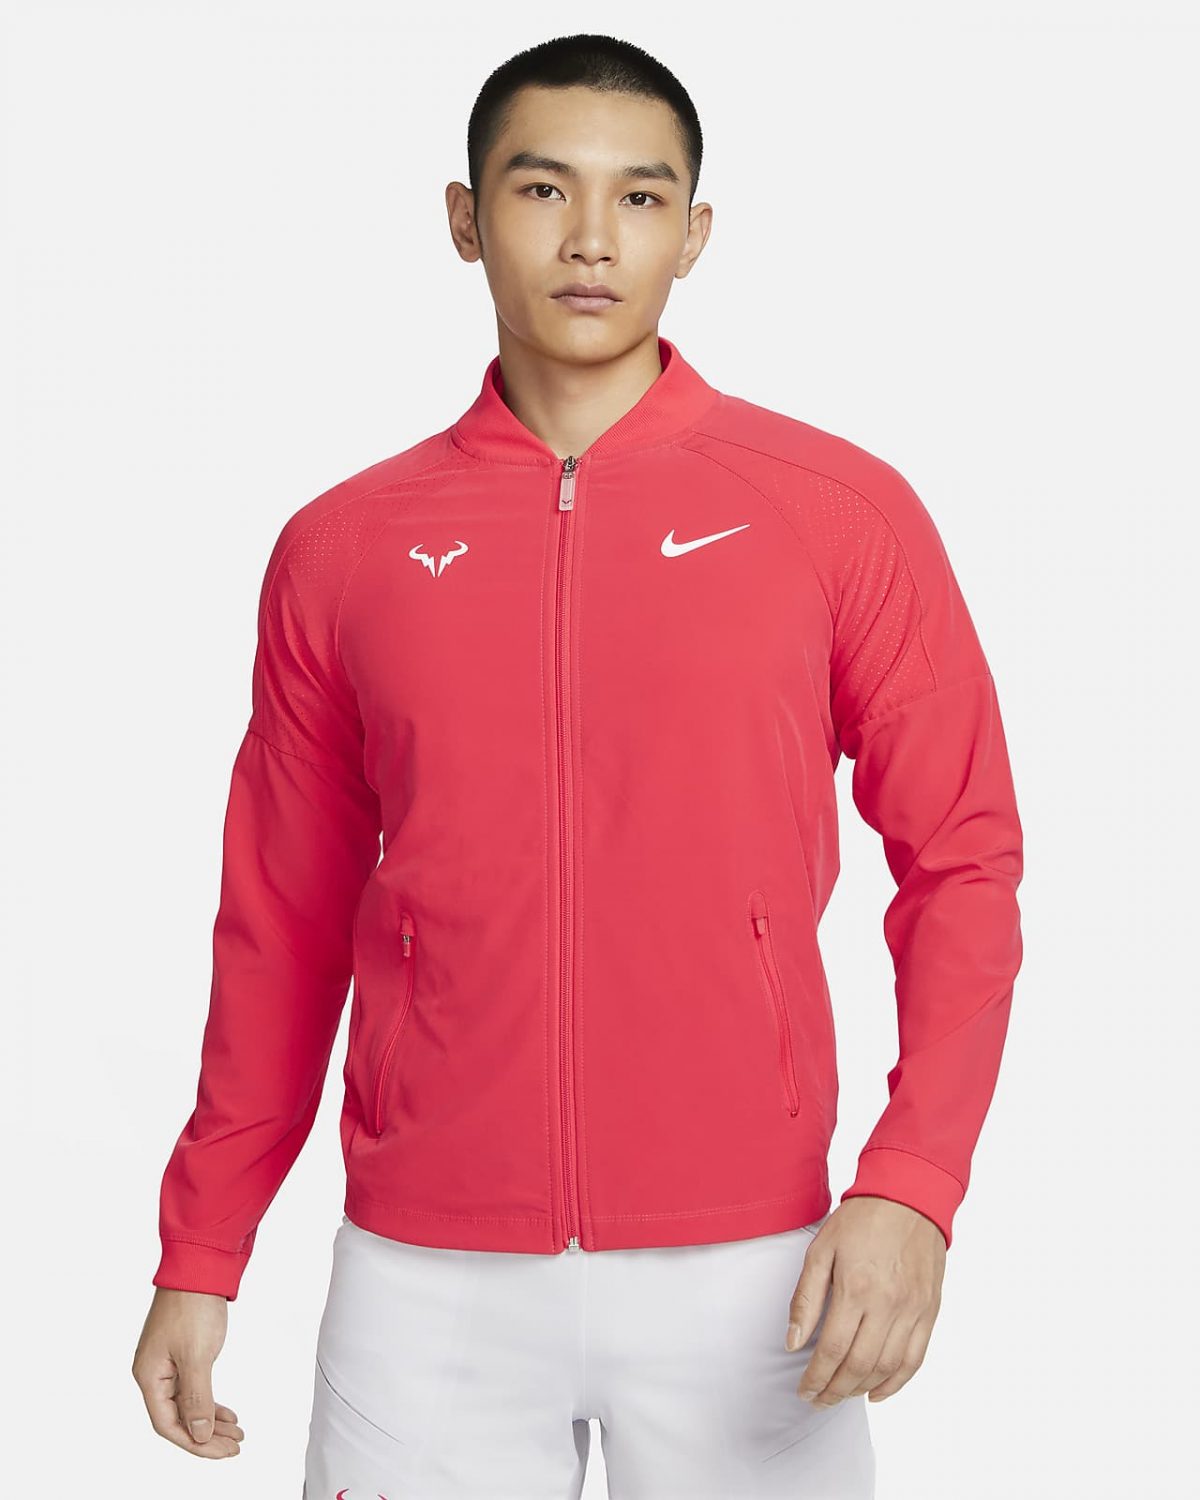 Мужская куртка Nike Dri-FIT Rafa фото